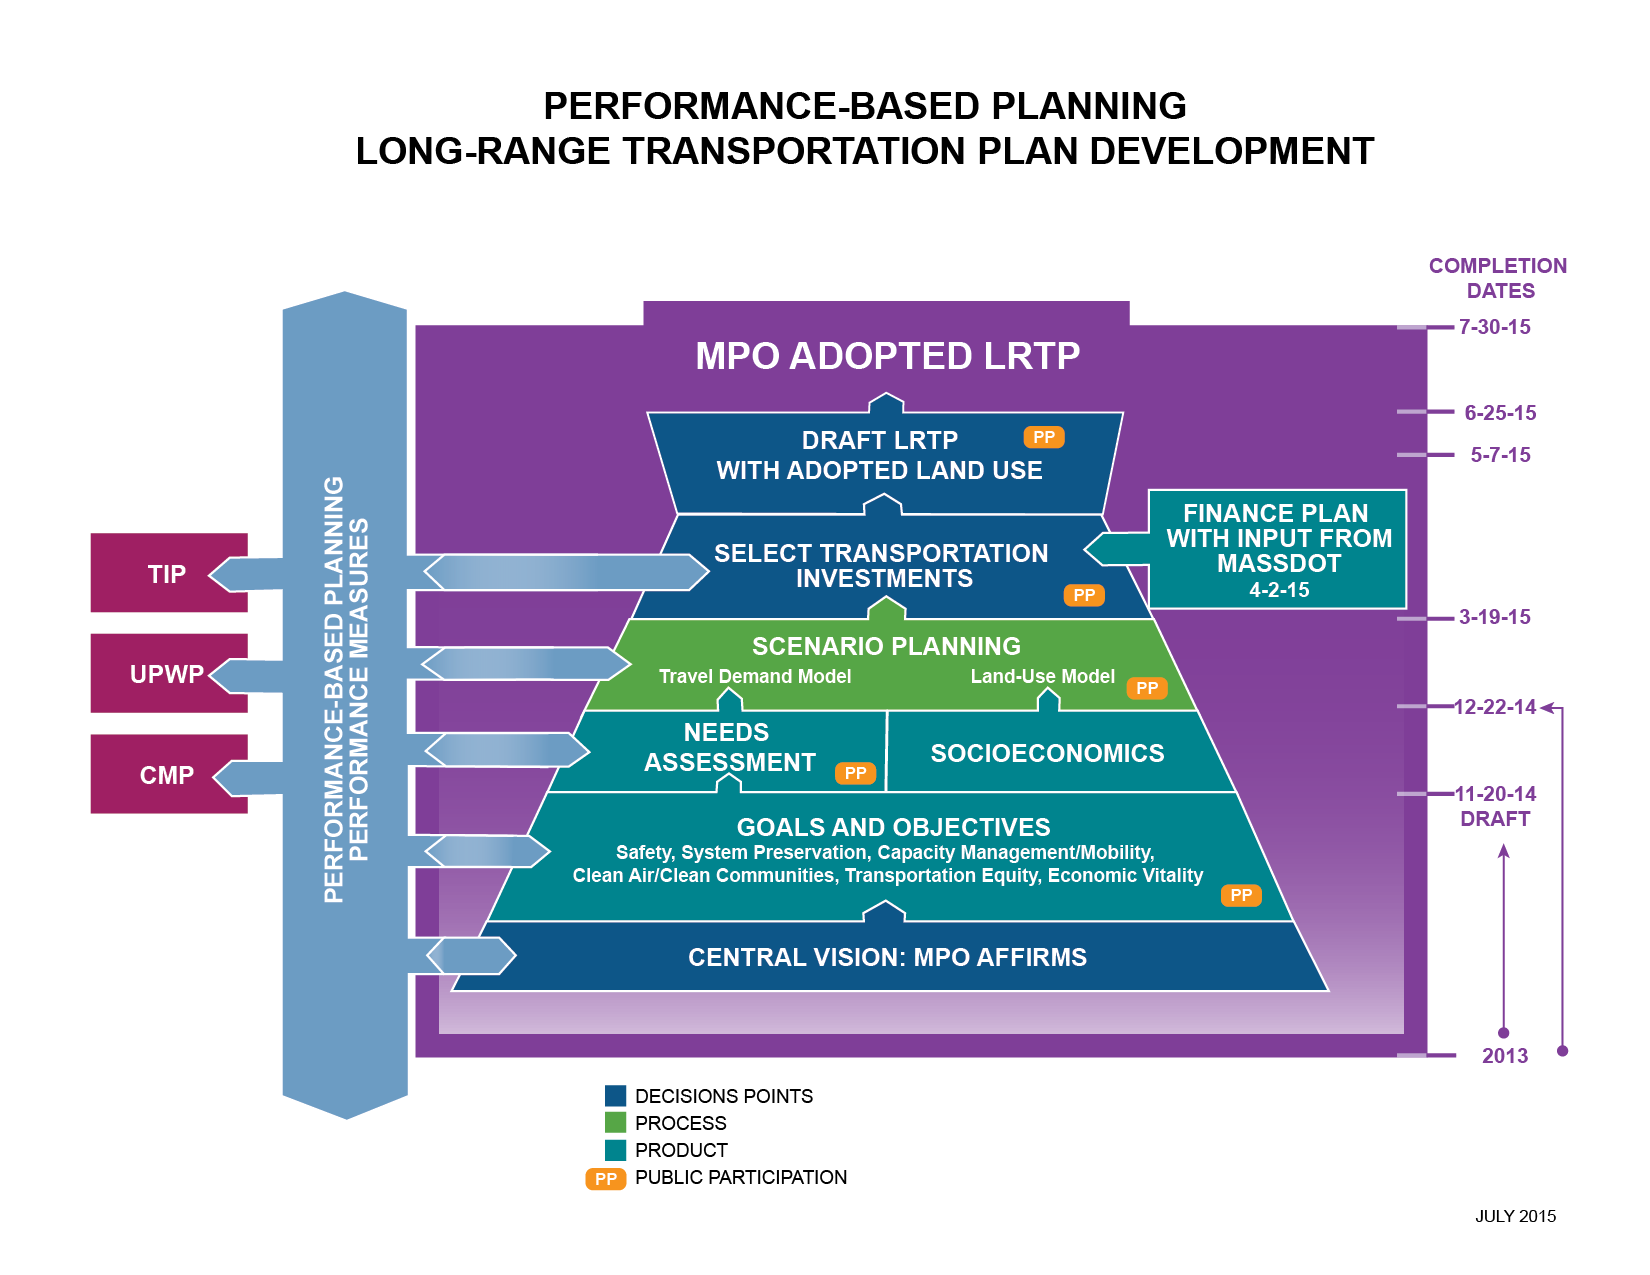 Perfomance-based planning development chart.